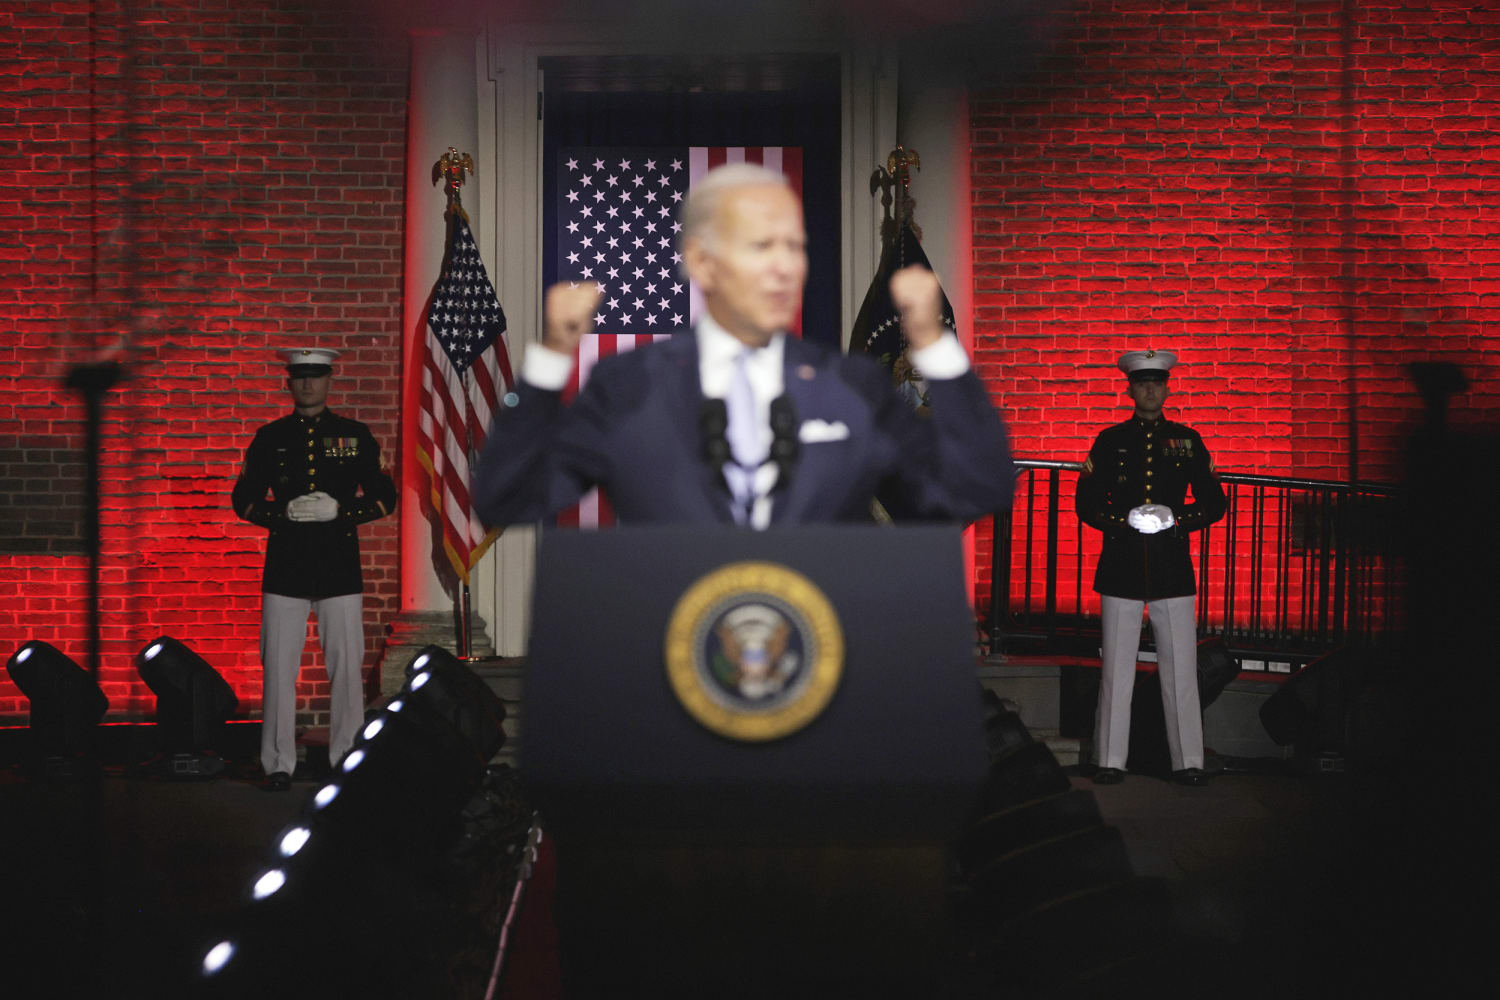 Joe Biden's speech took place in front of Marines. Here's why.